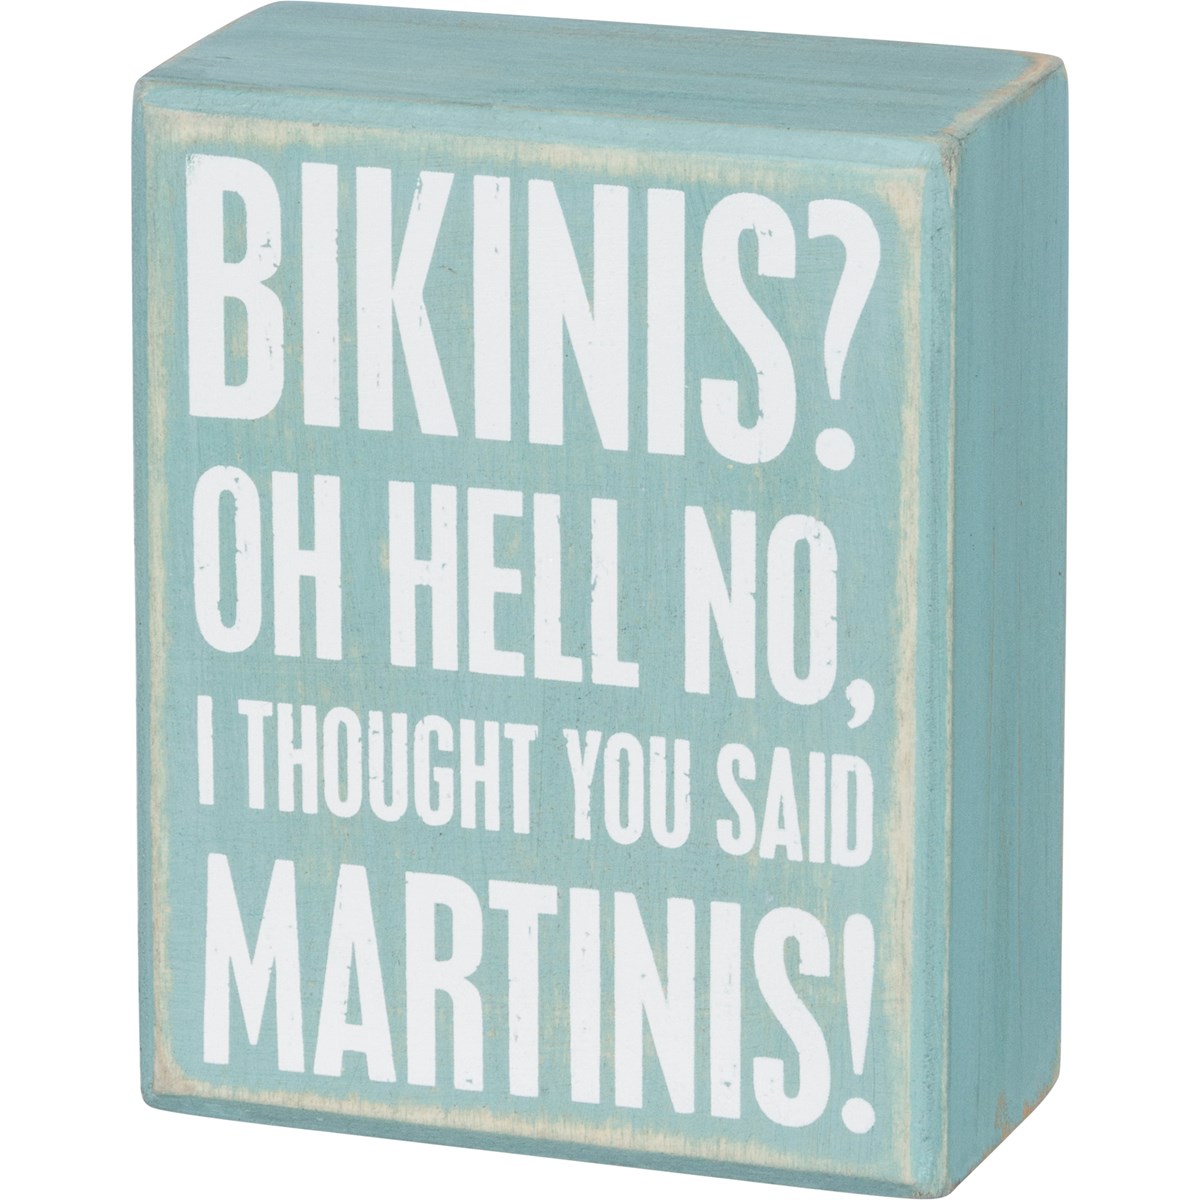 Bikinis? Box Sign - Wood